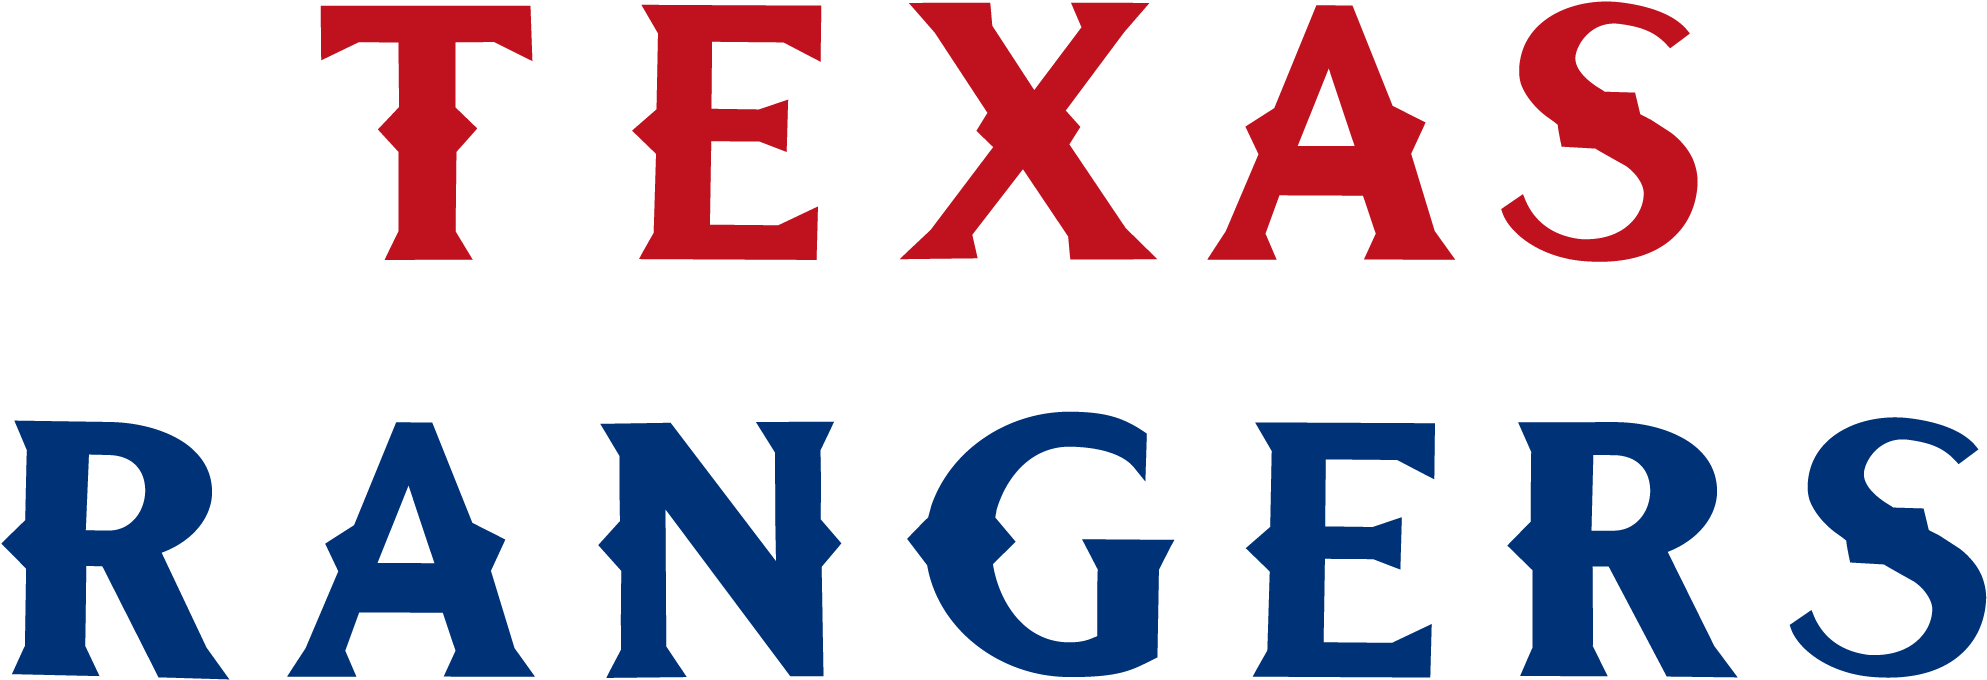 Texas Rangers Logos Jpg Stock - Electric Blue (2400x1000)